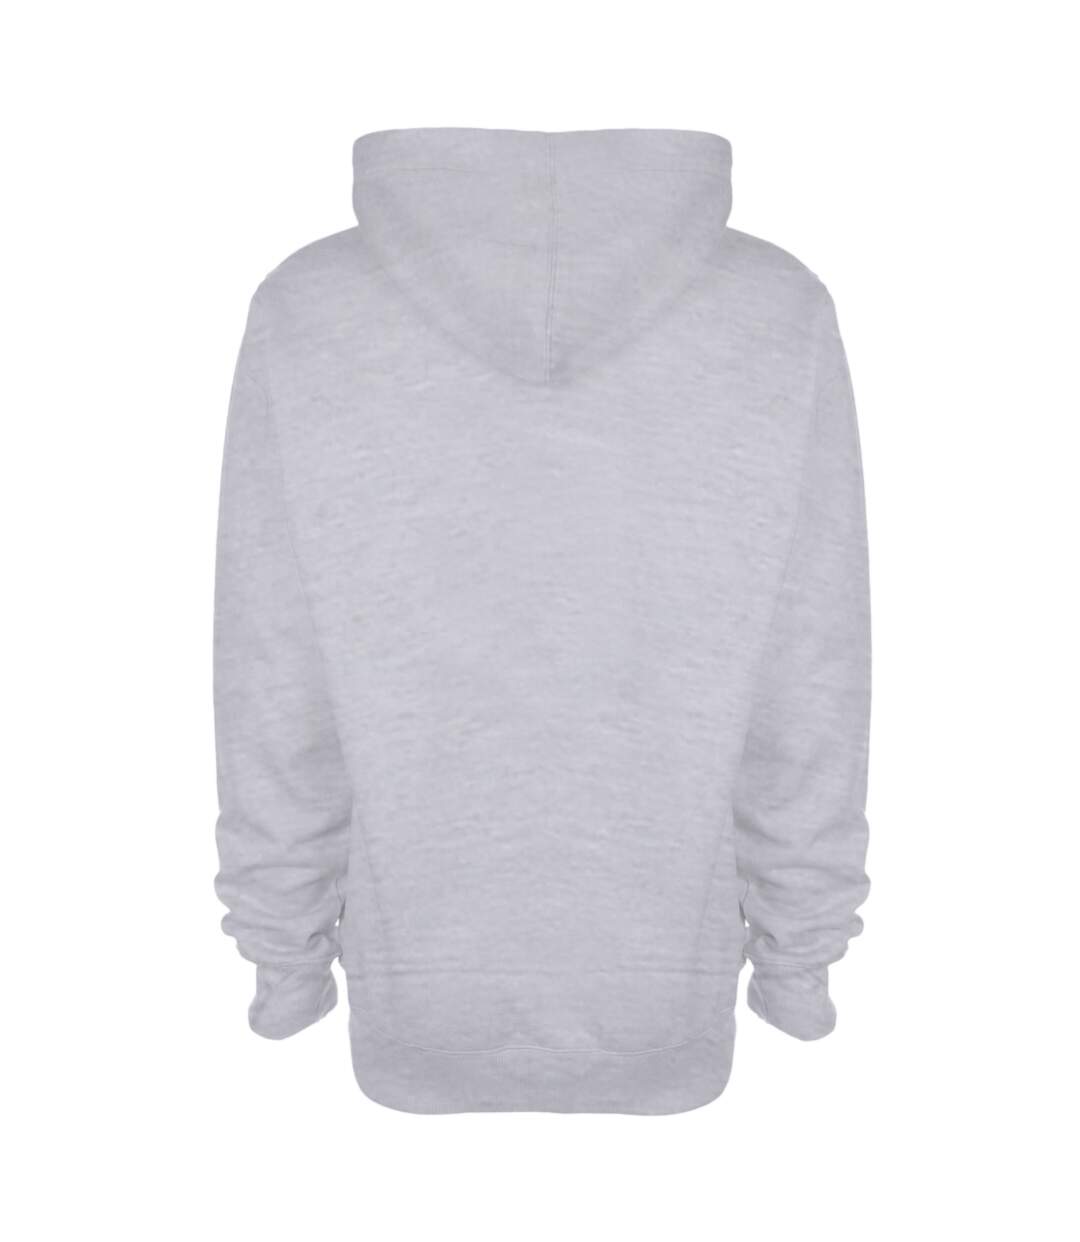 FDM Unisex Plain Original Hooded Sweatshirt / Hoodie (300 GSM) (Heather Grey)